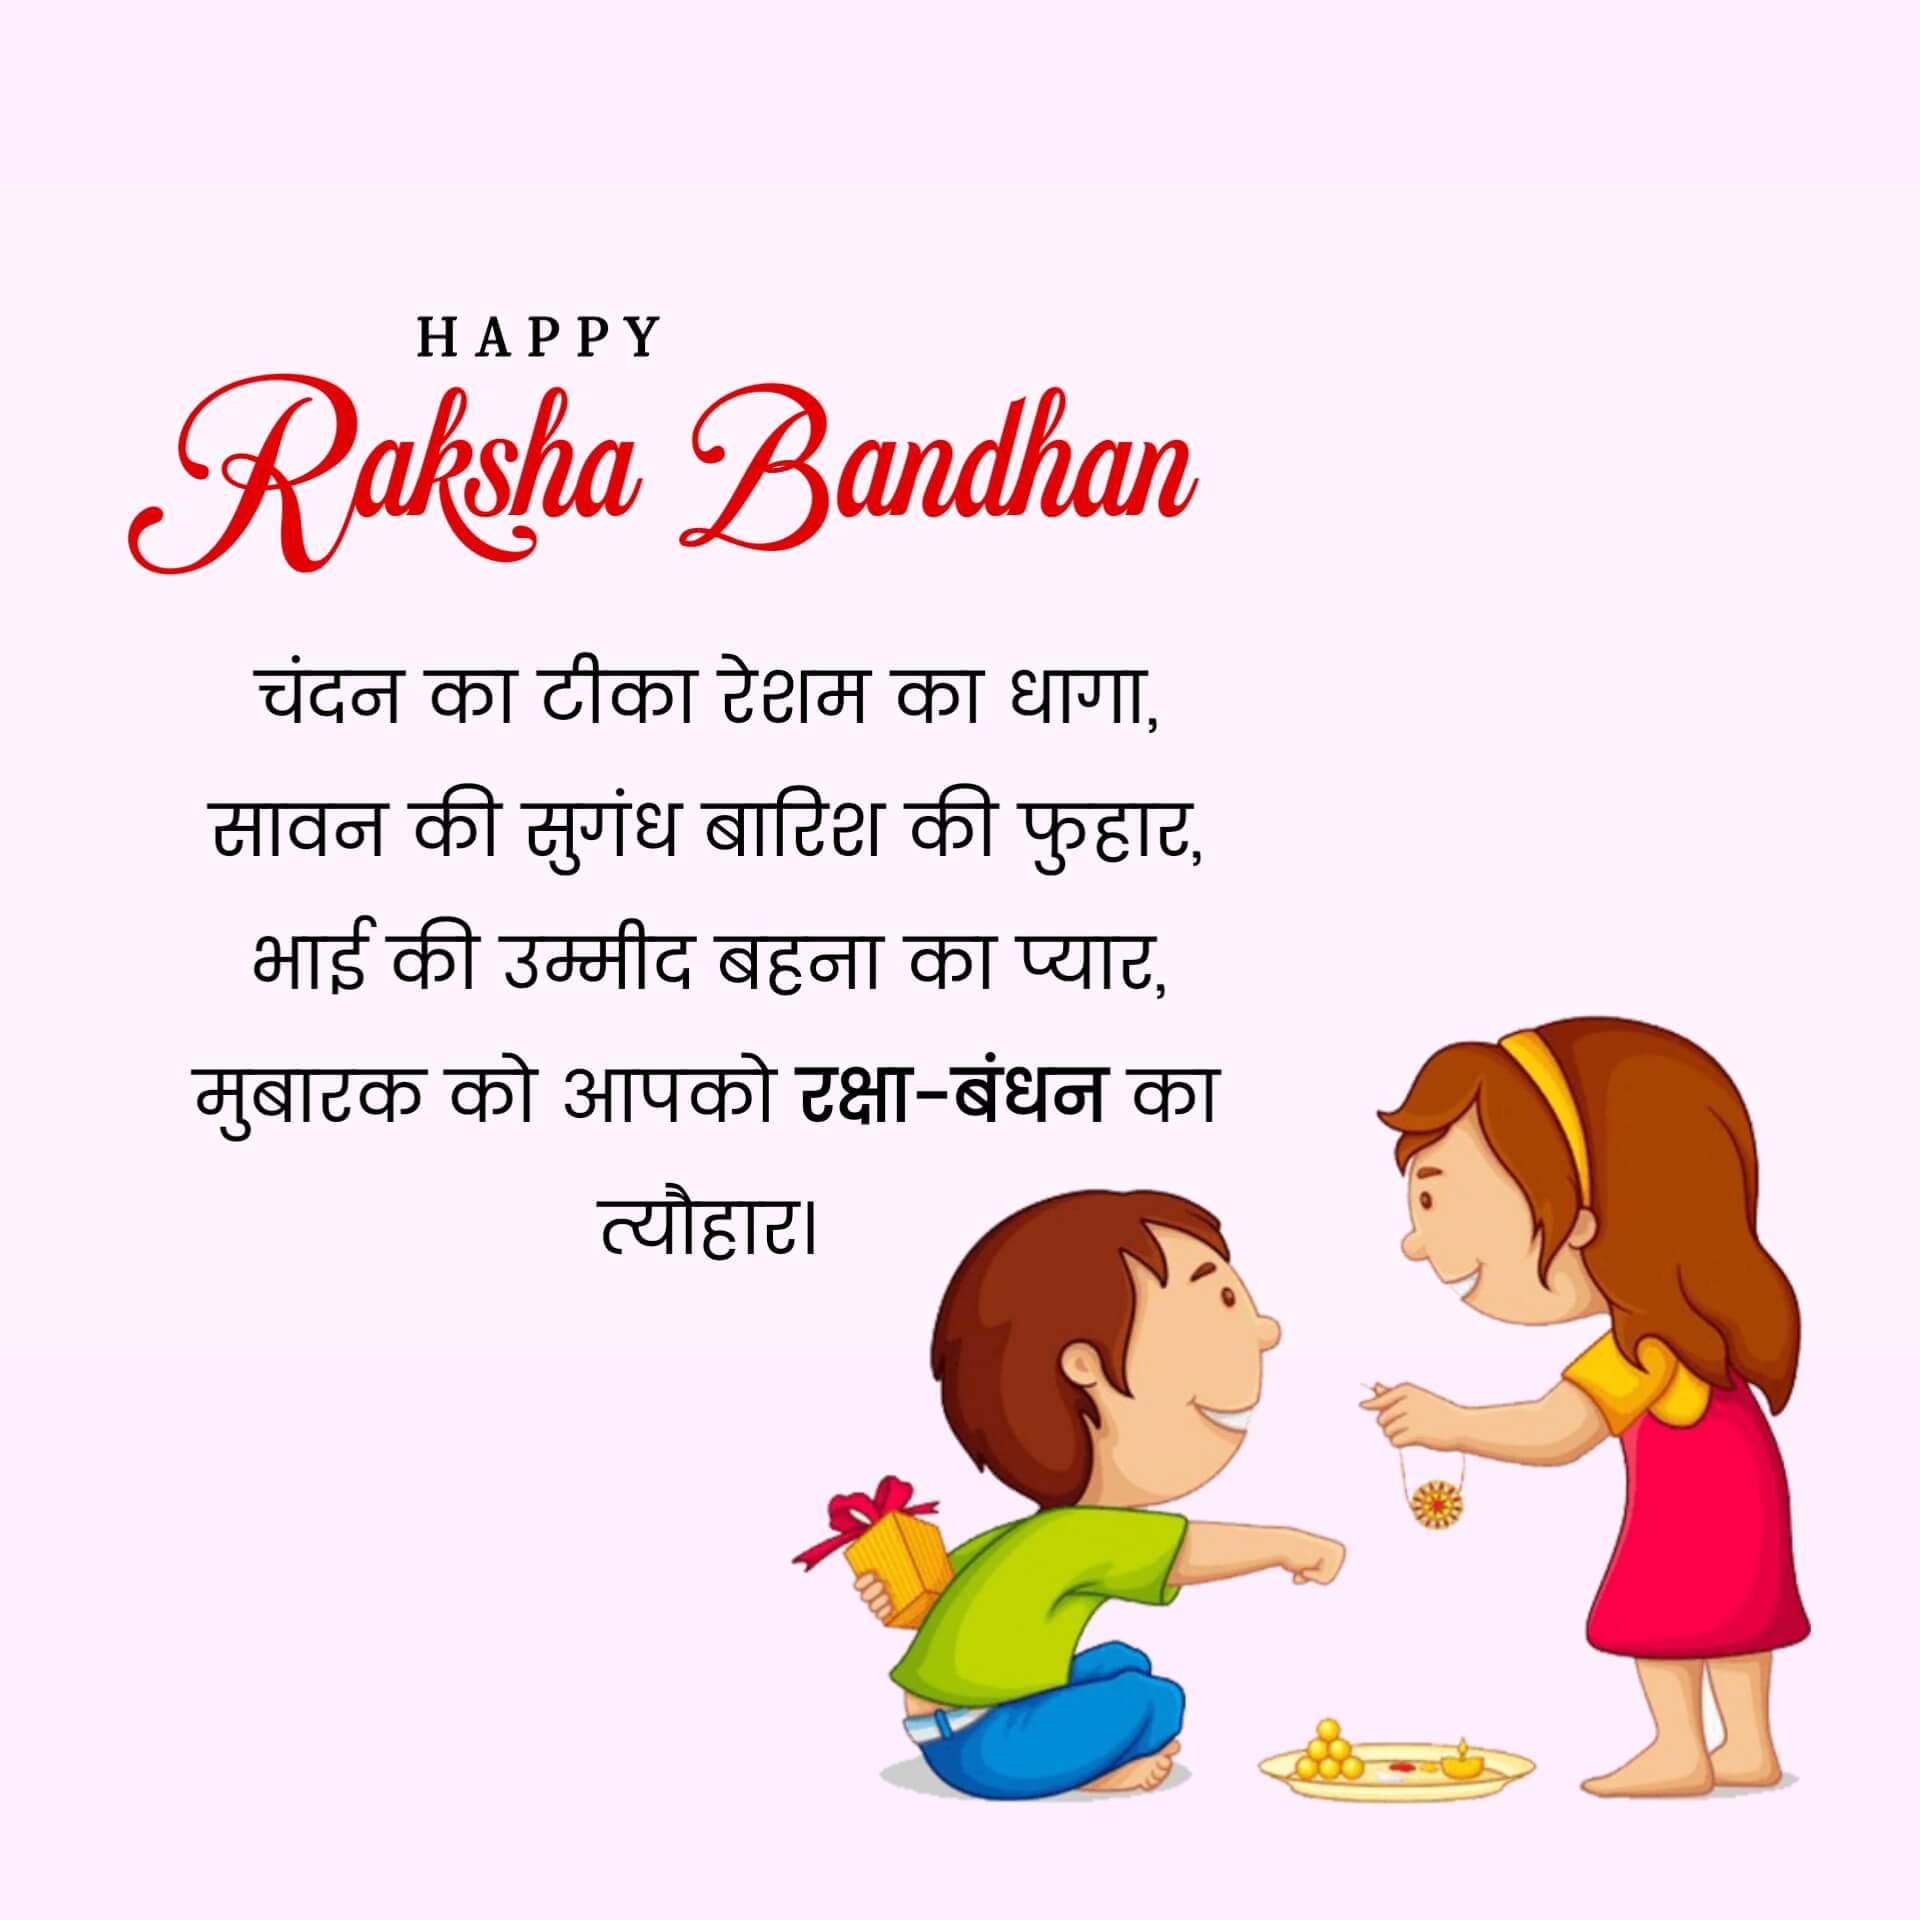 Raksha Bandhan Shayari Image in Hindi